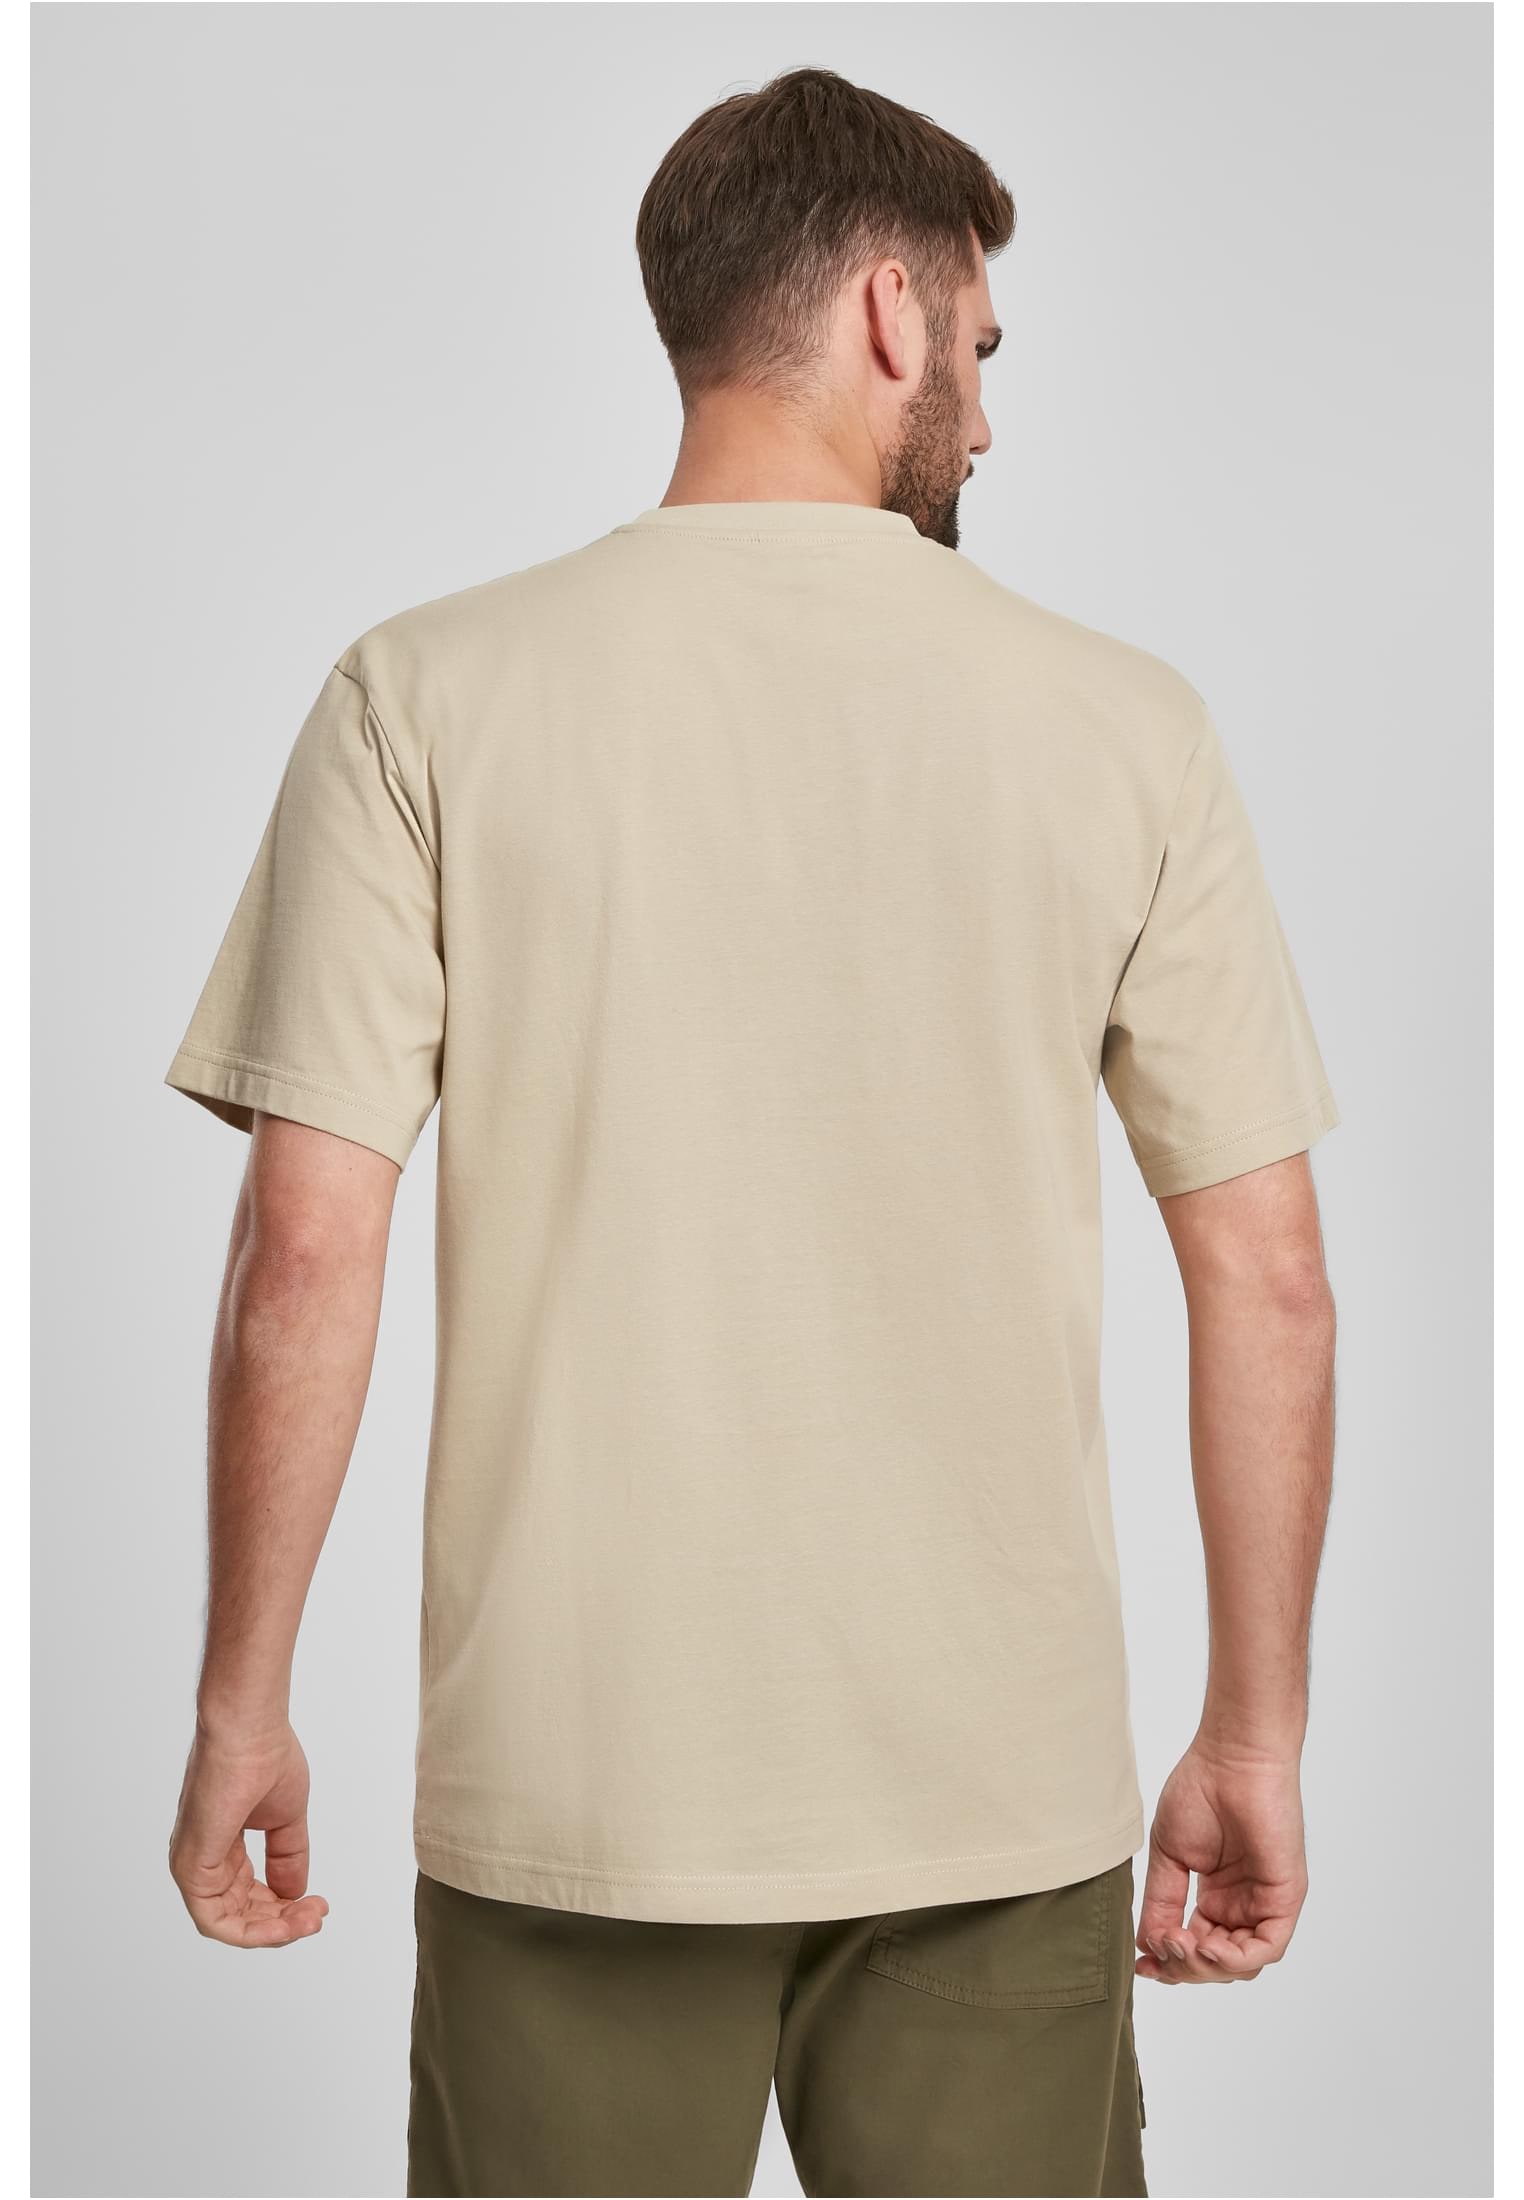 Tee«, URBAN kaufen T-Shirt »Herren Tall CLASSICS tlg.) (1 online